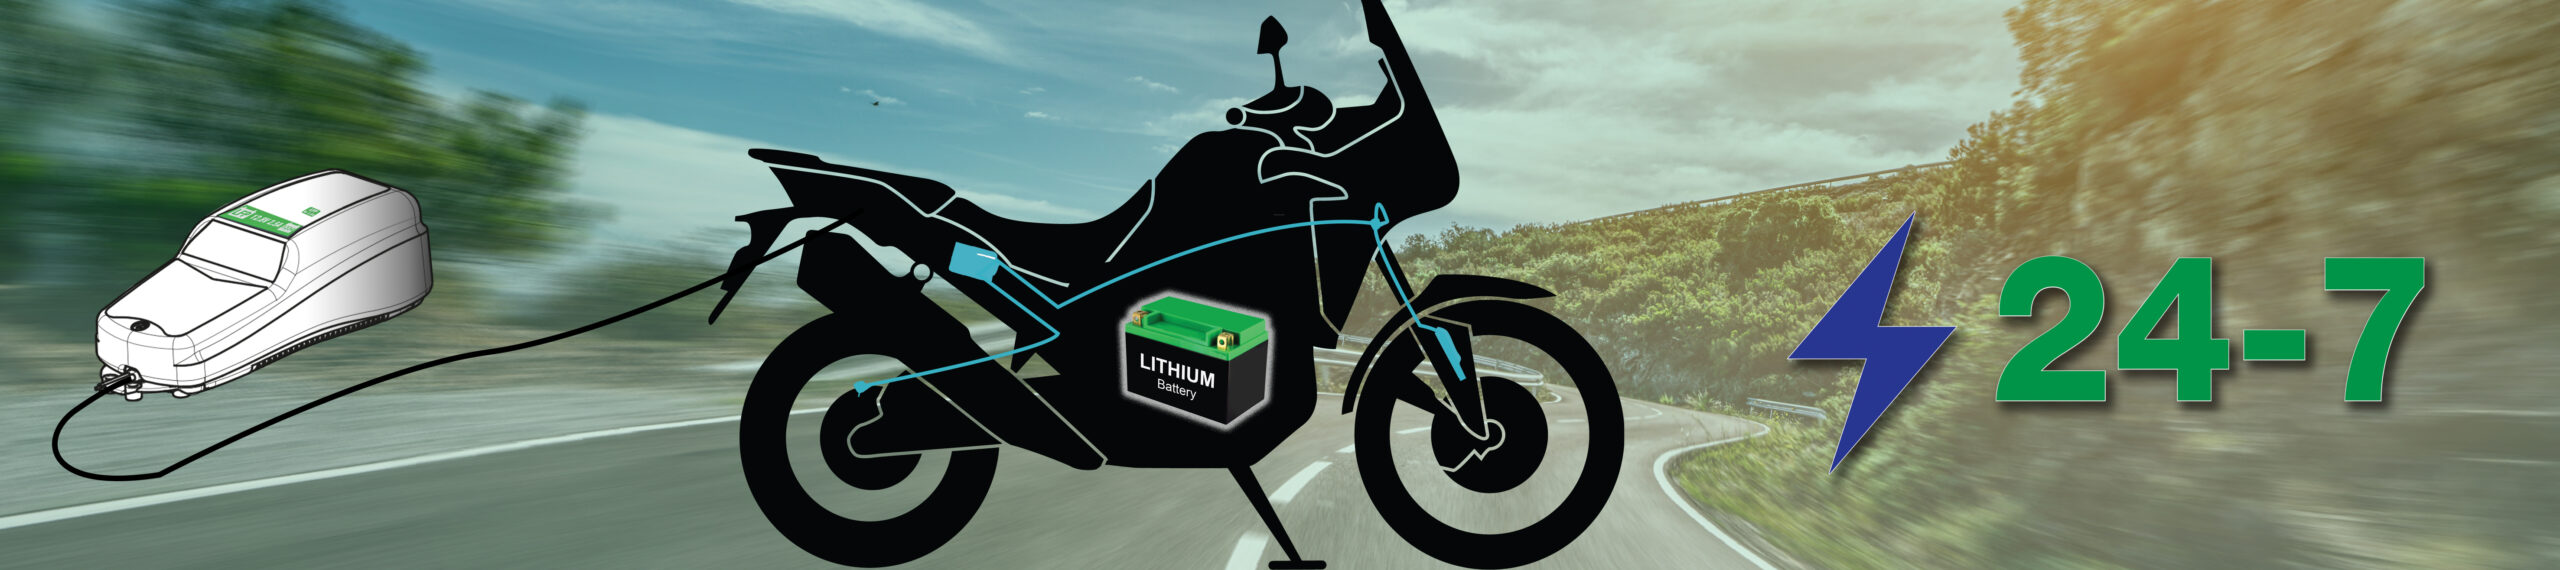 Lithium battery 24-7 safe maintenance